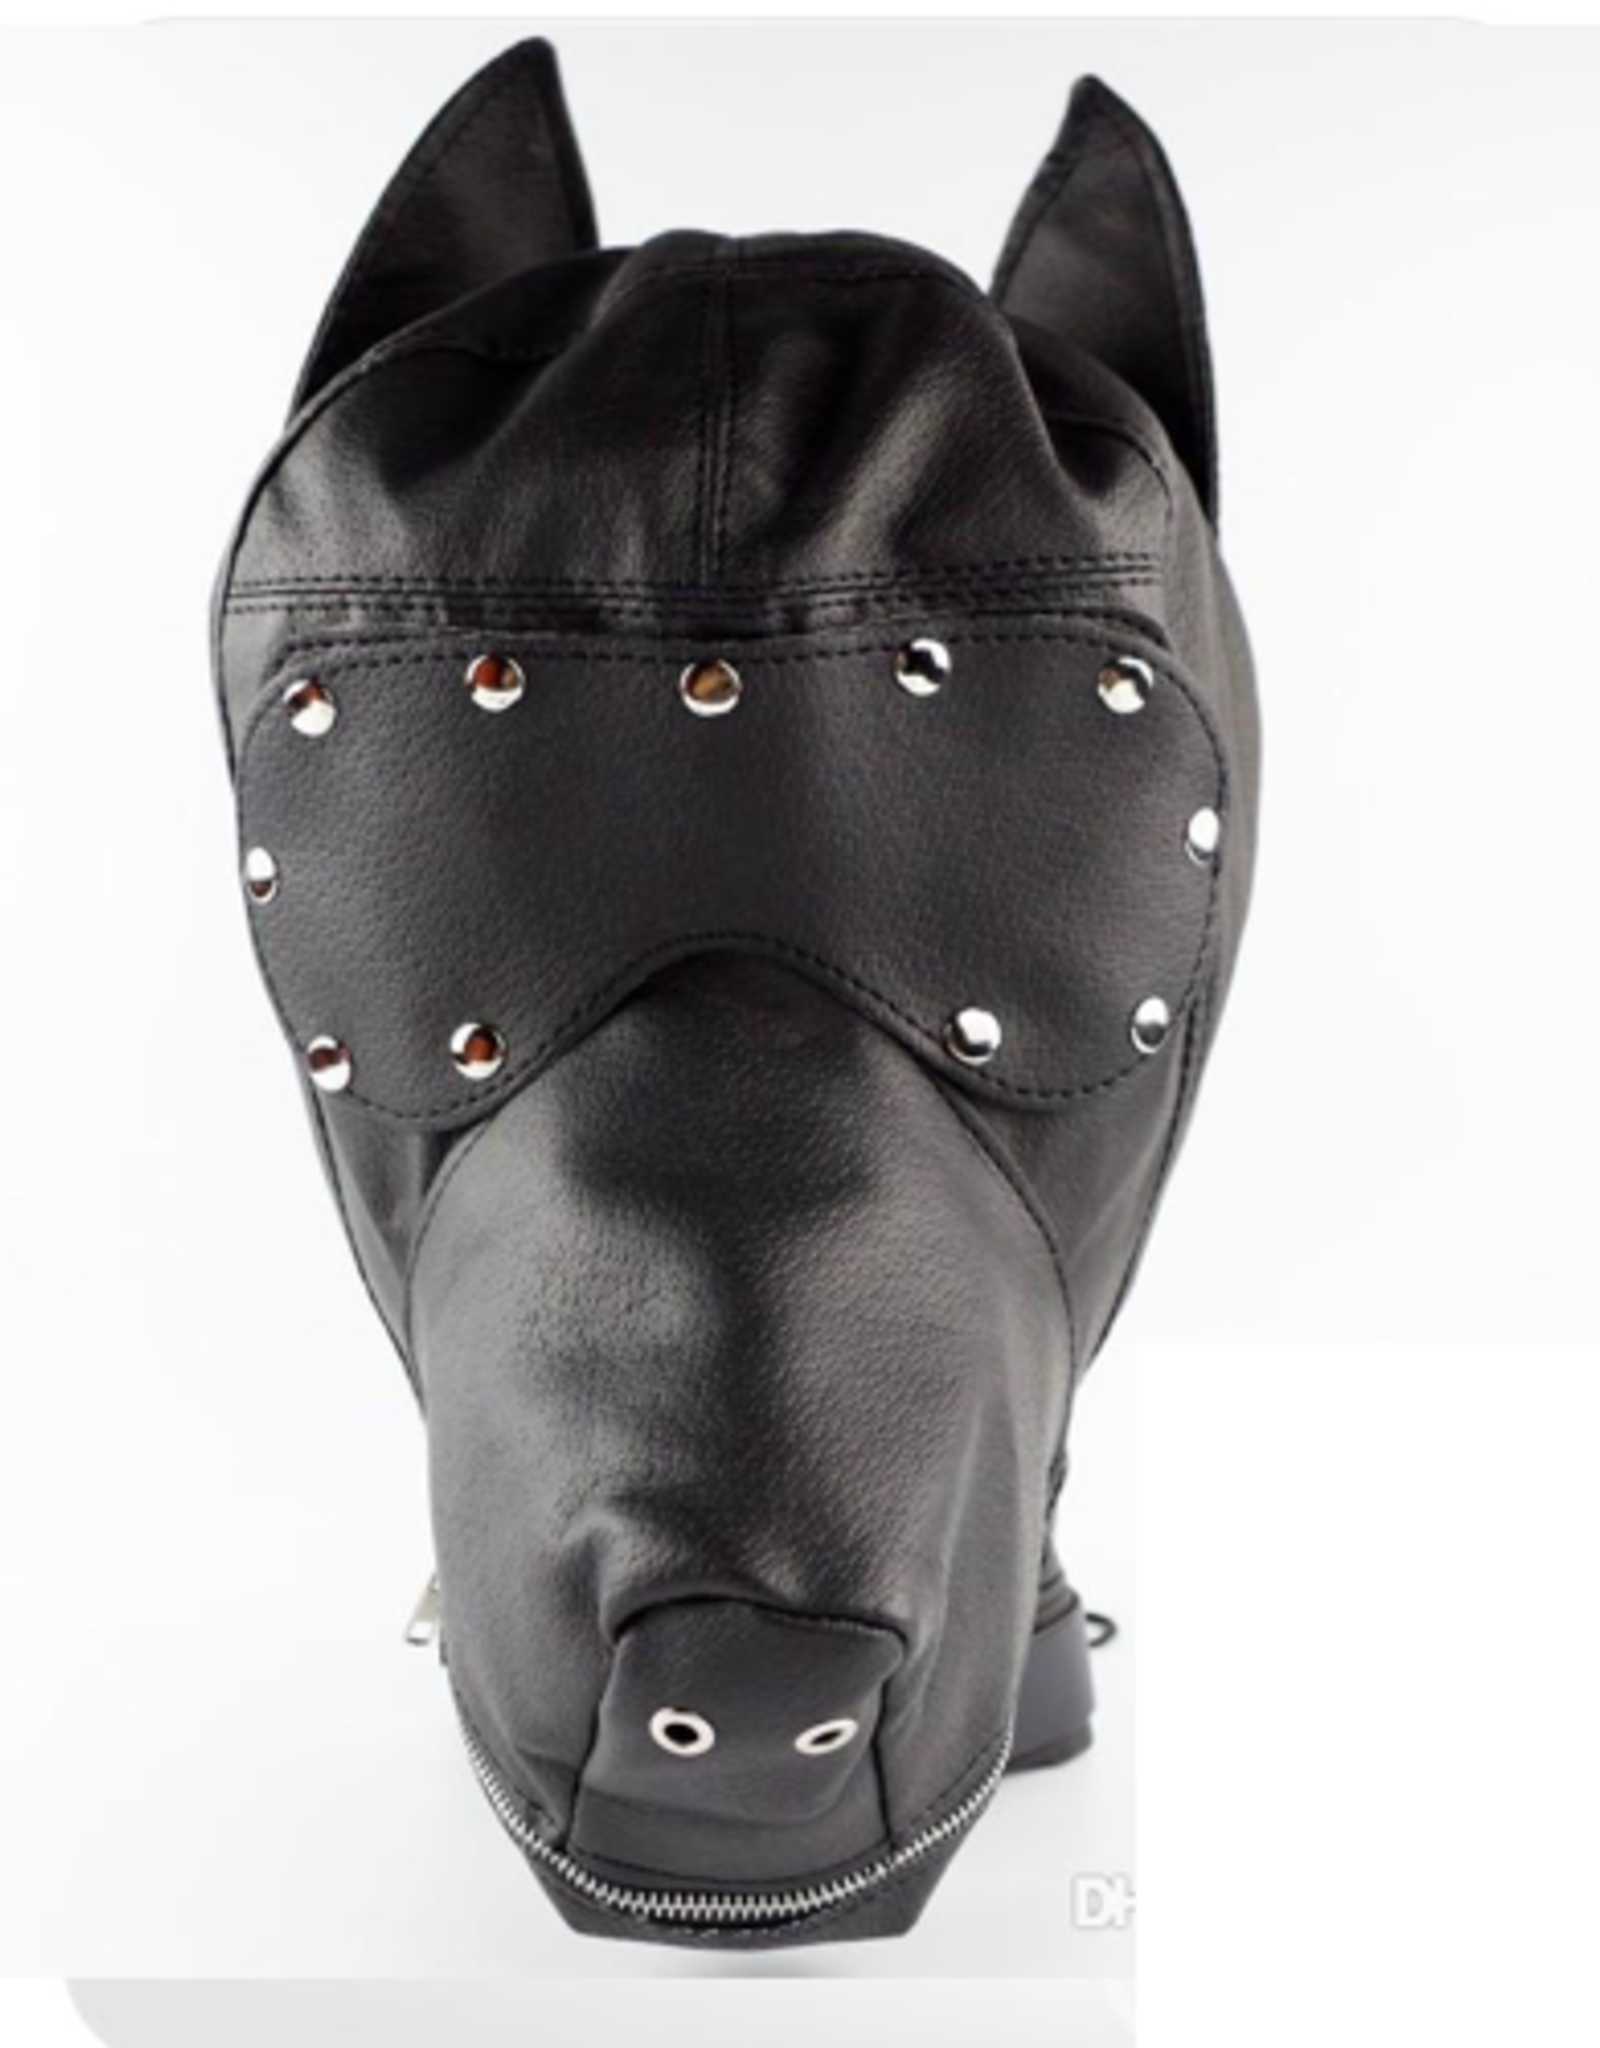 Ultimate Dog Hood Leather Head Harness Master Slave Play Bondage SM Set - TOKYO VALENTINO MIAMI ONLINE STORE -